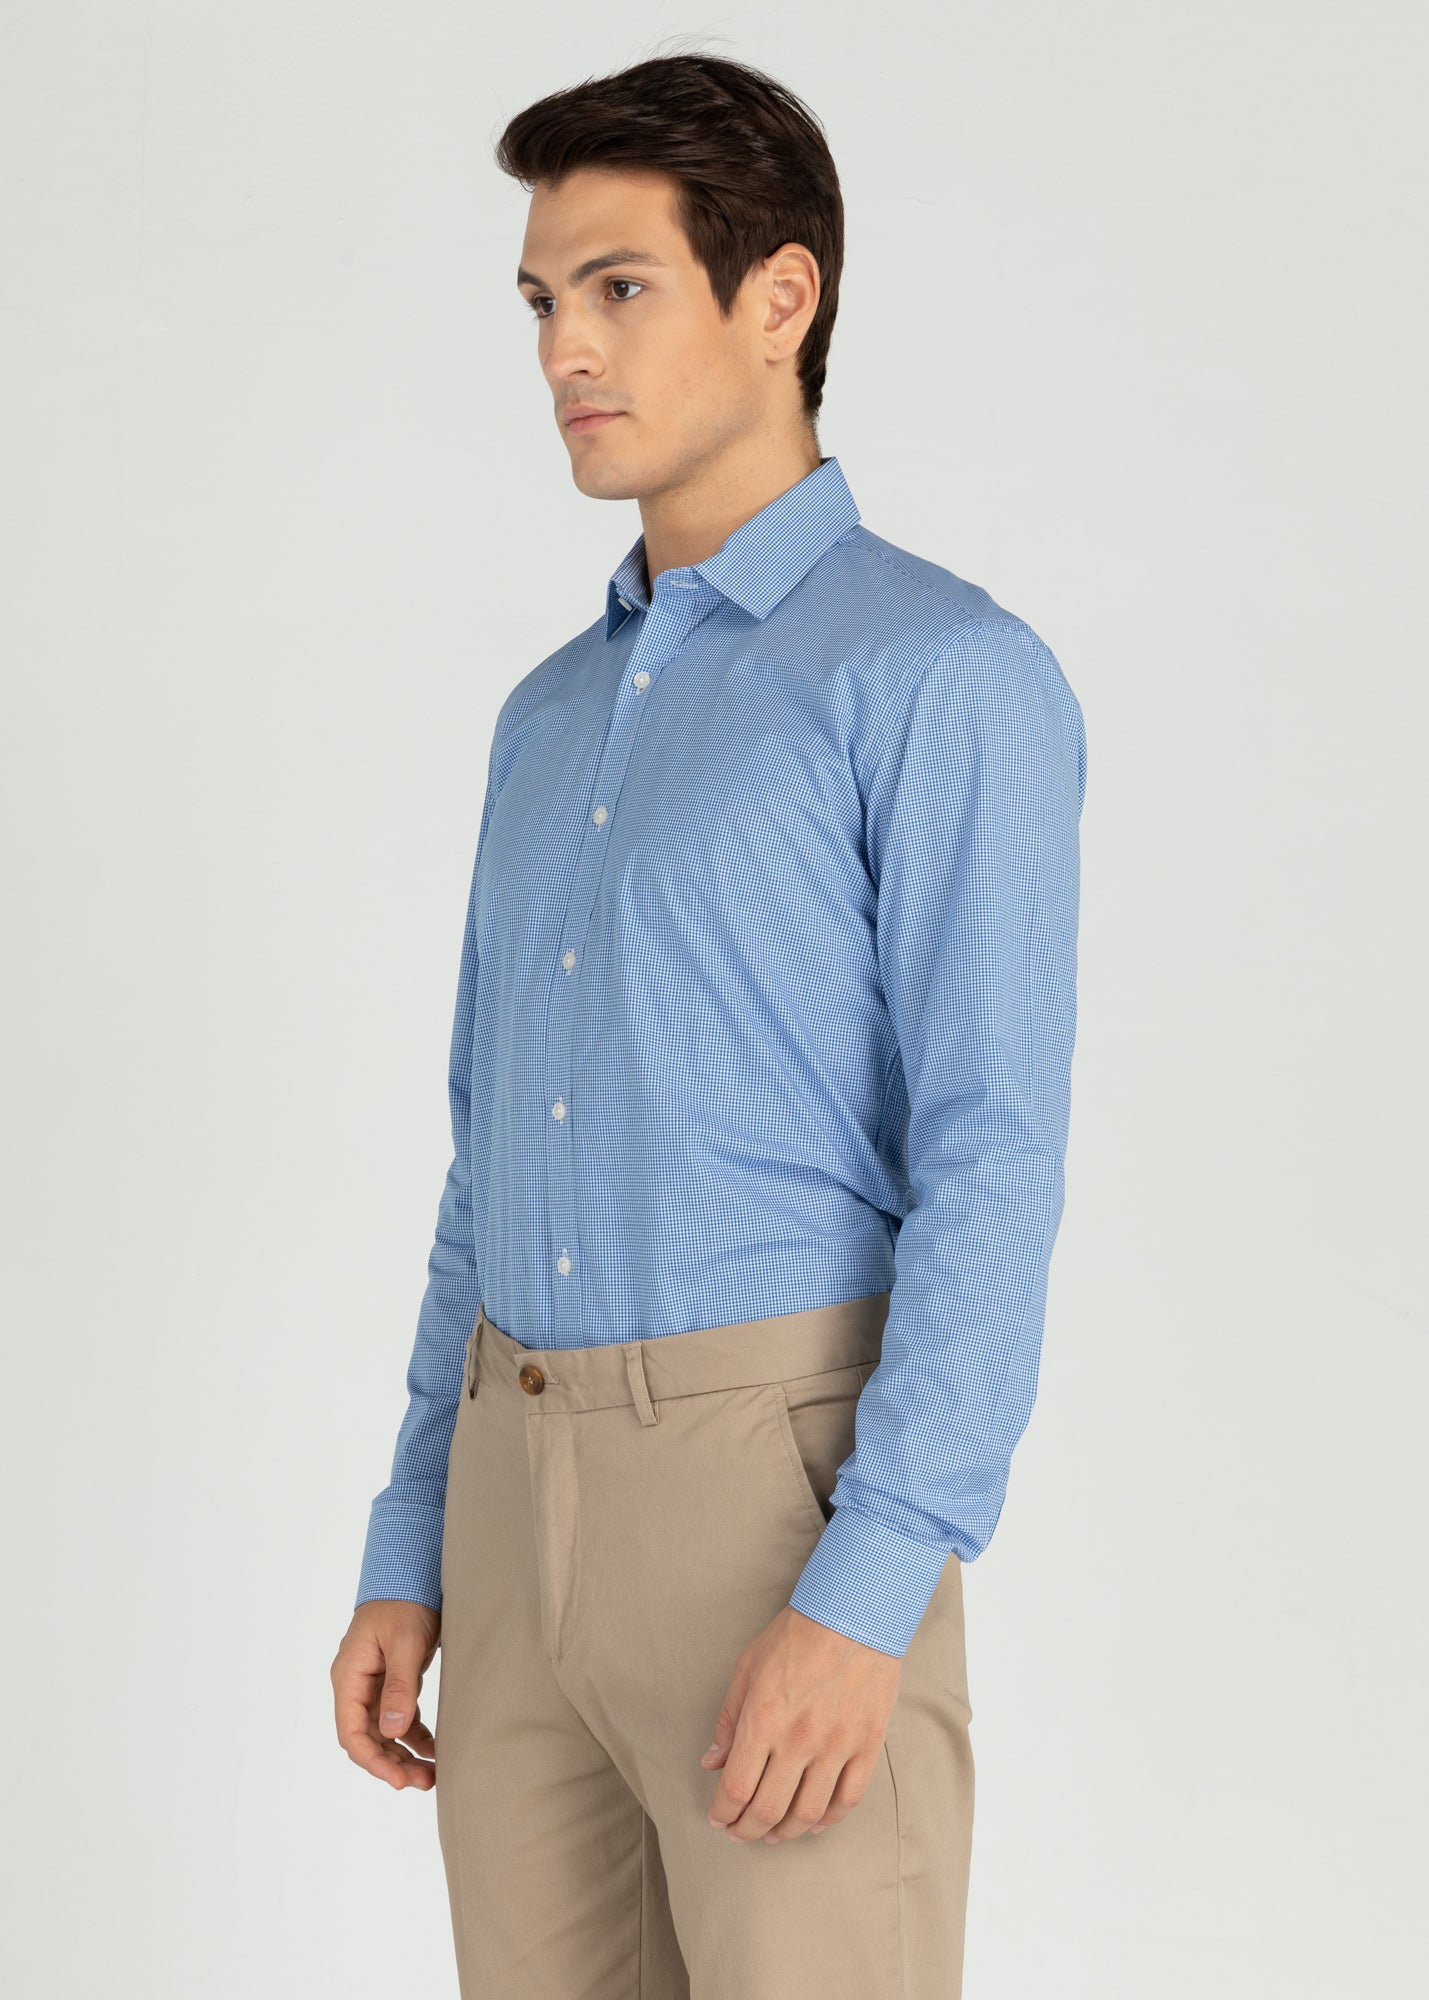 BlueChip Premium Fine cotton printed dress shirt